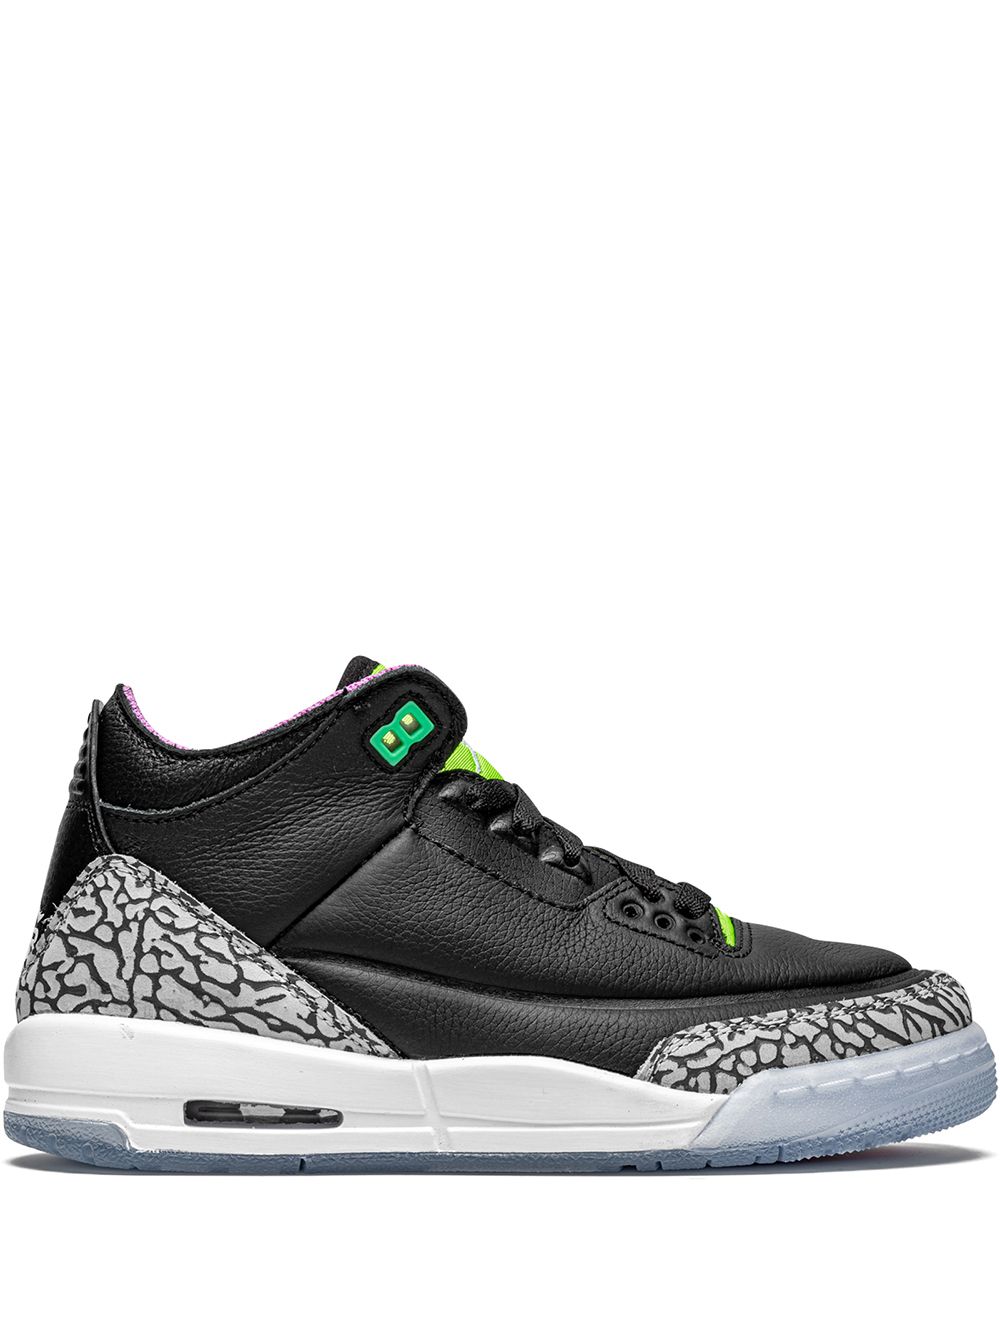 Jordan Kids Jordan 3 Retro "Electric Green" sneakers - Black von Jordan Kids